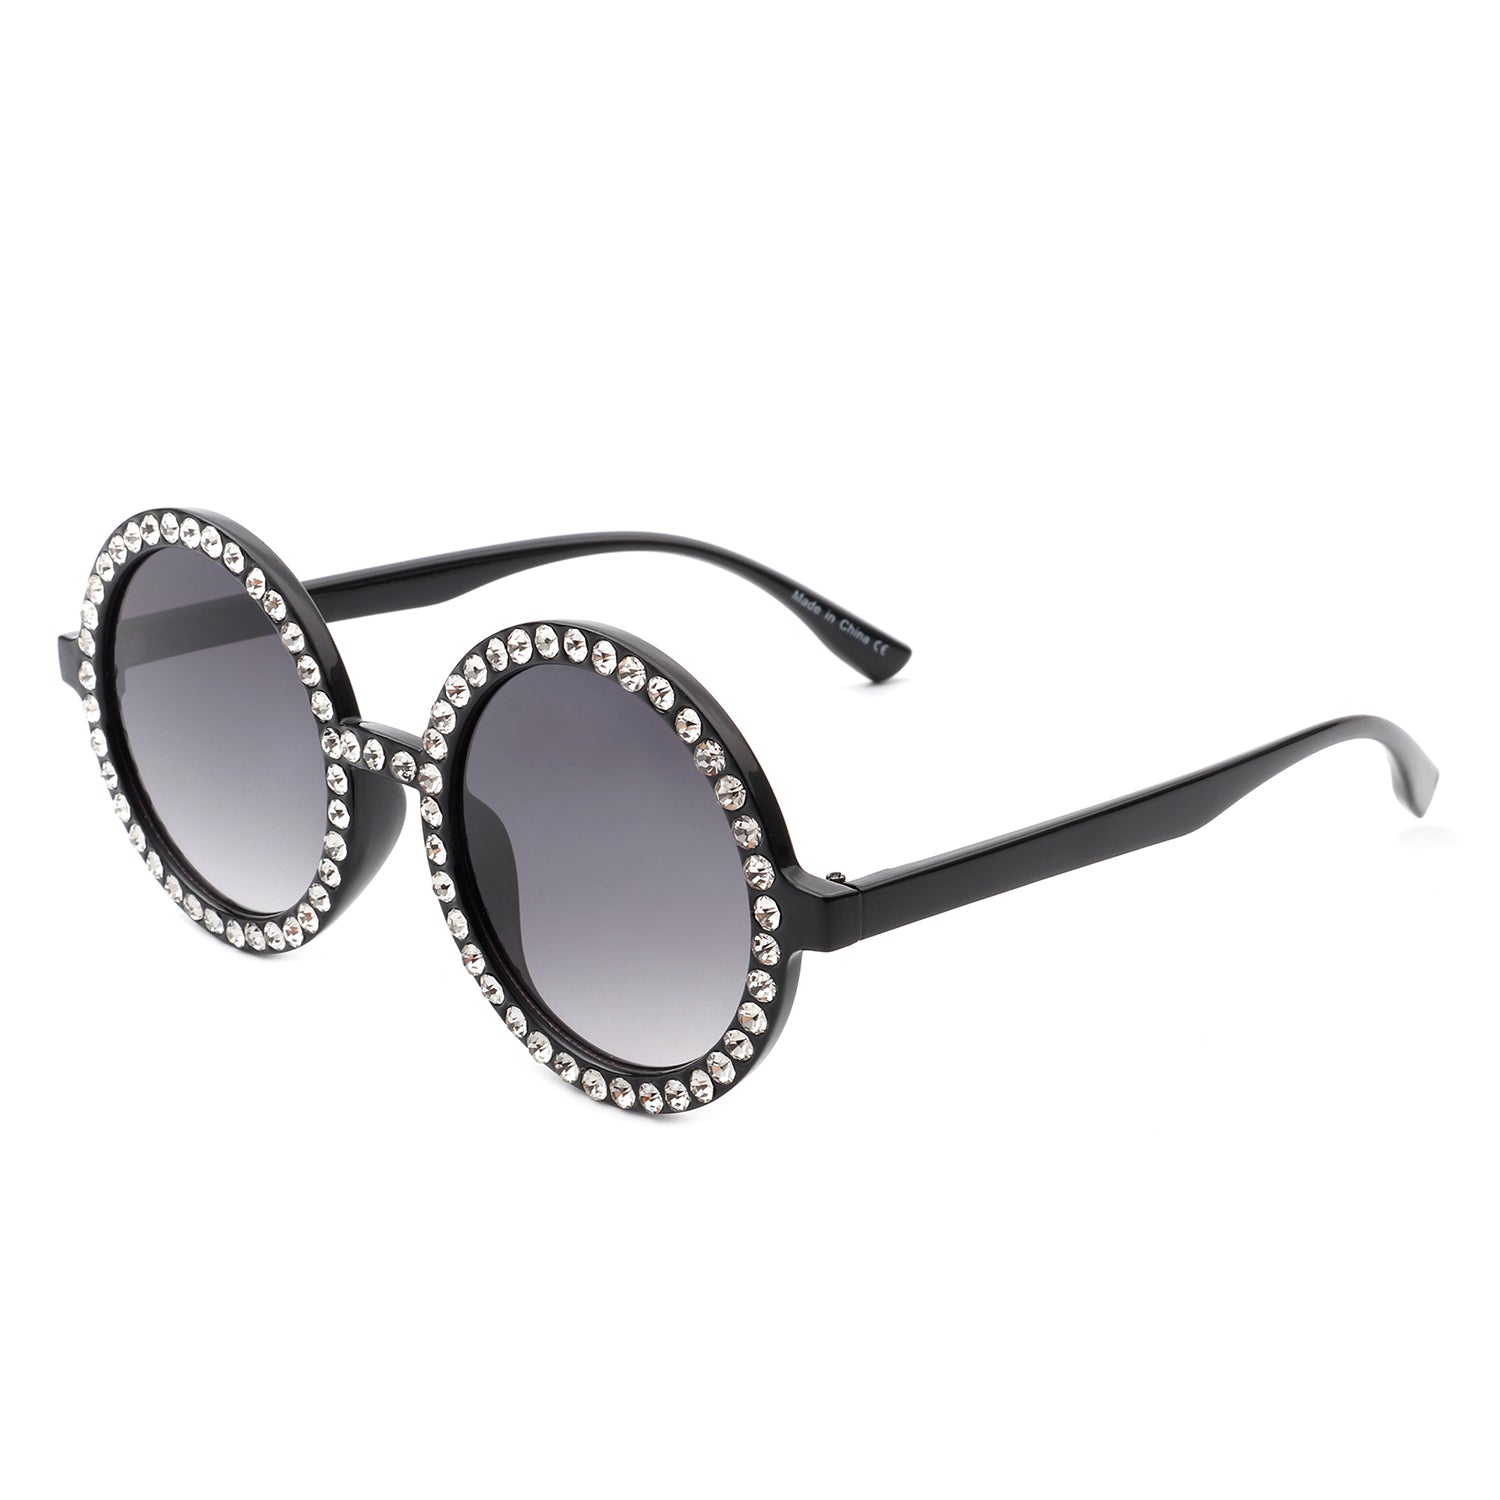 round sunglasses  Sunglasses women, Fashion sunglasses, Round sunglasses